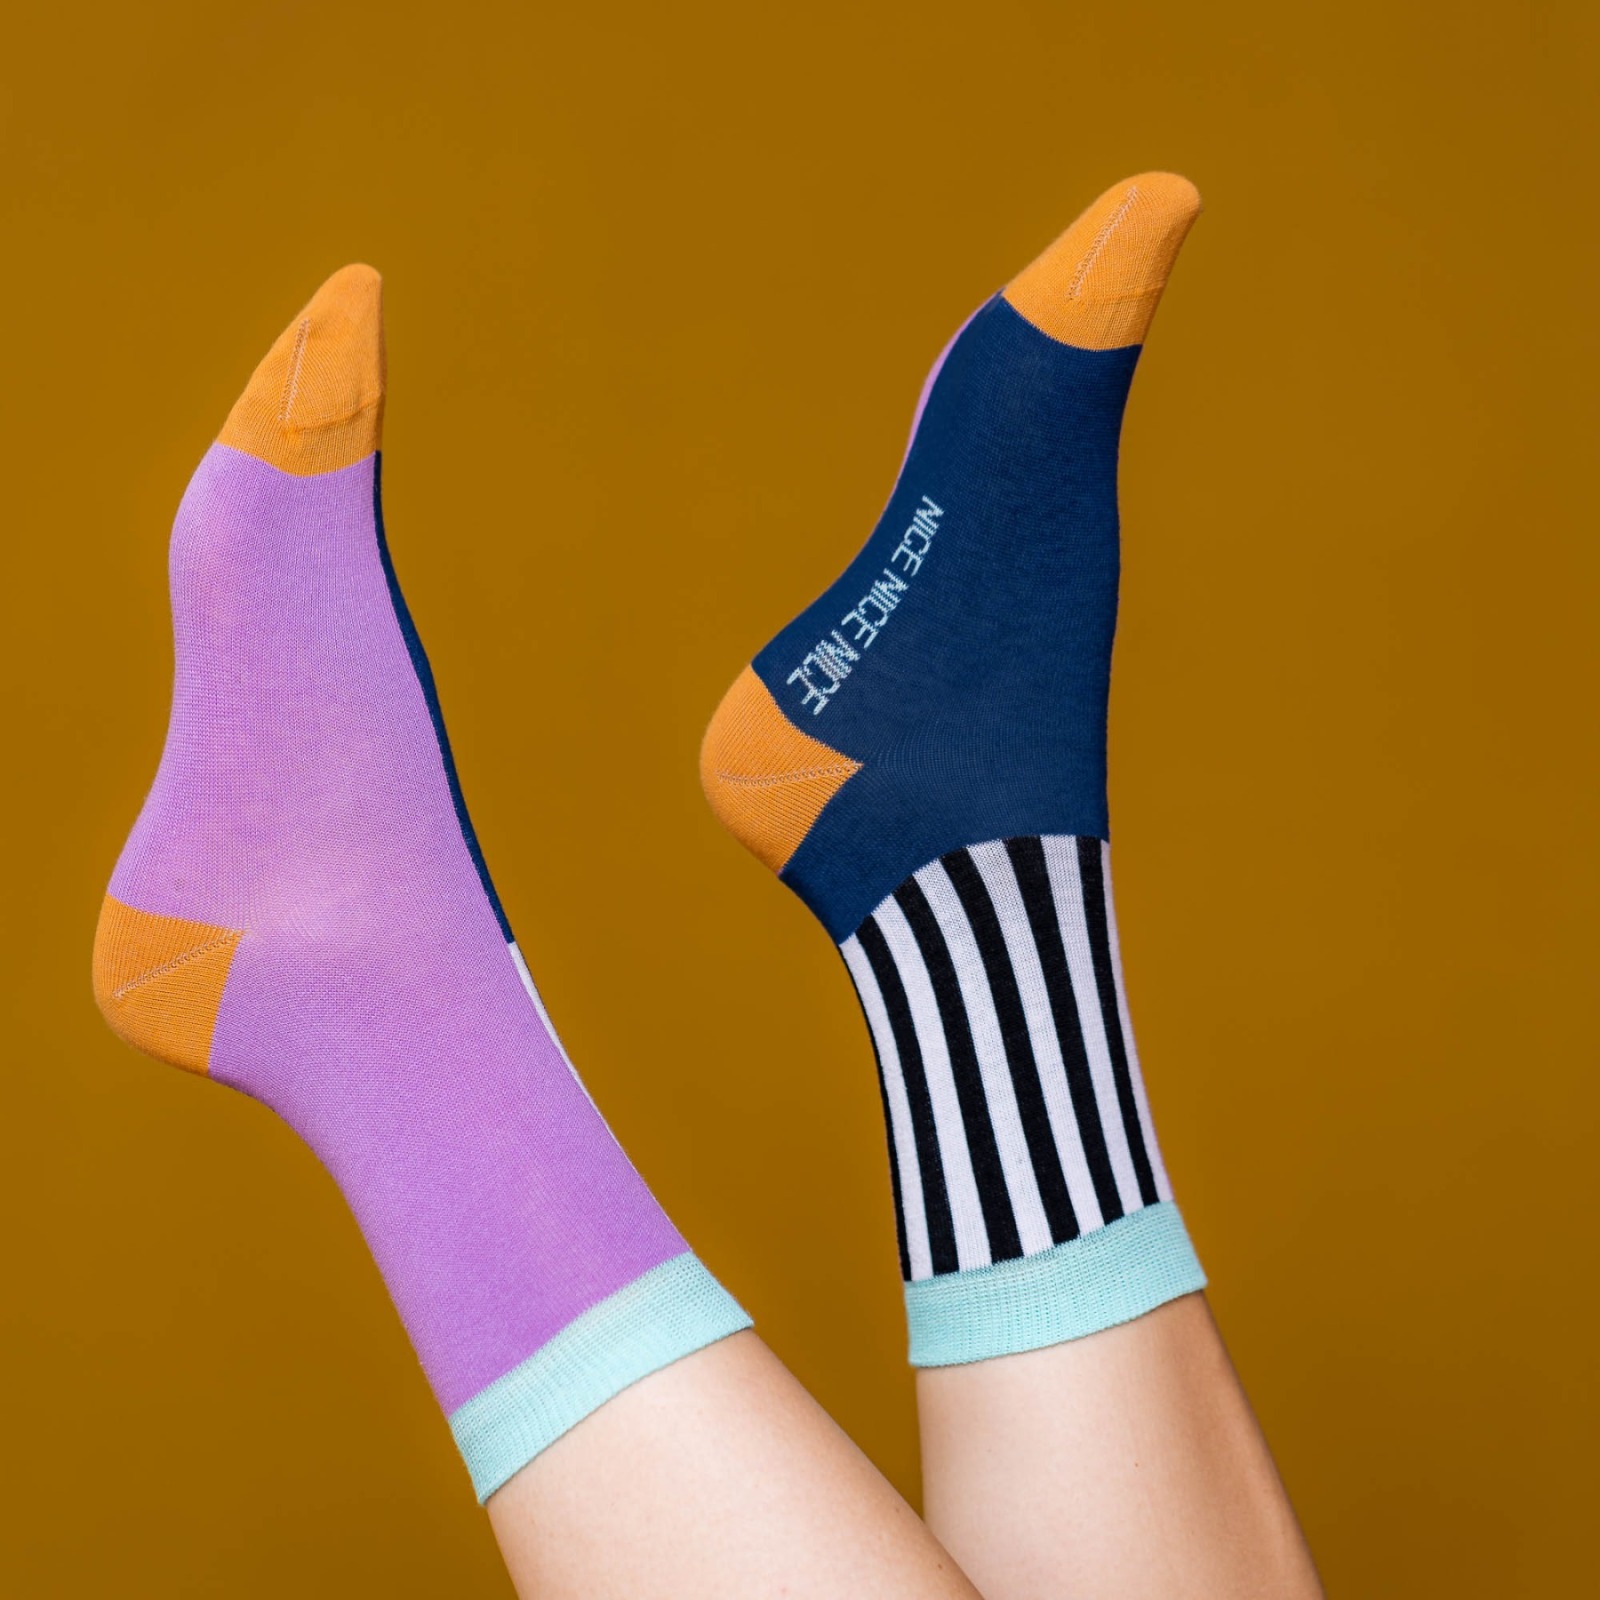 nicenicenice - nice socks half stripes purple